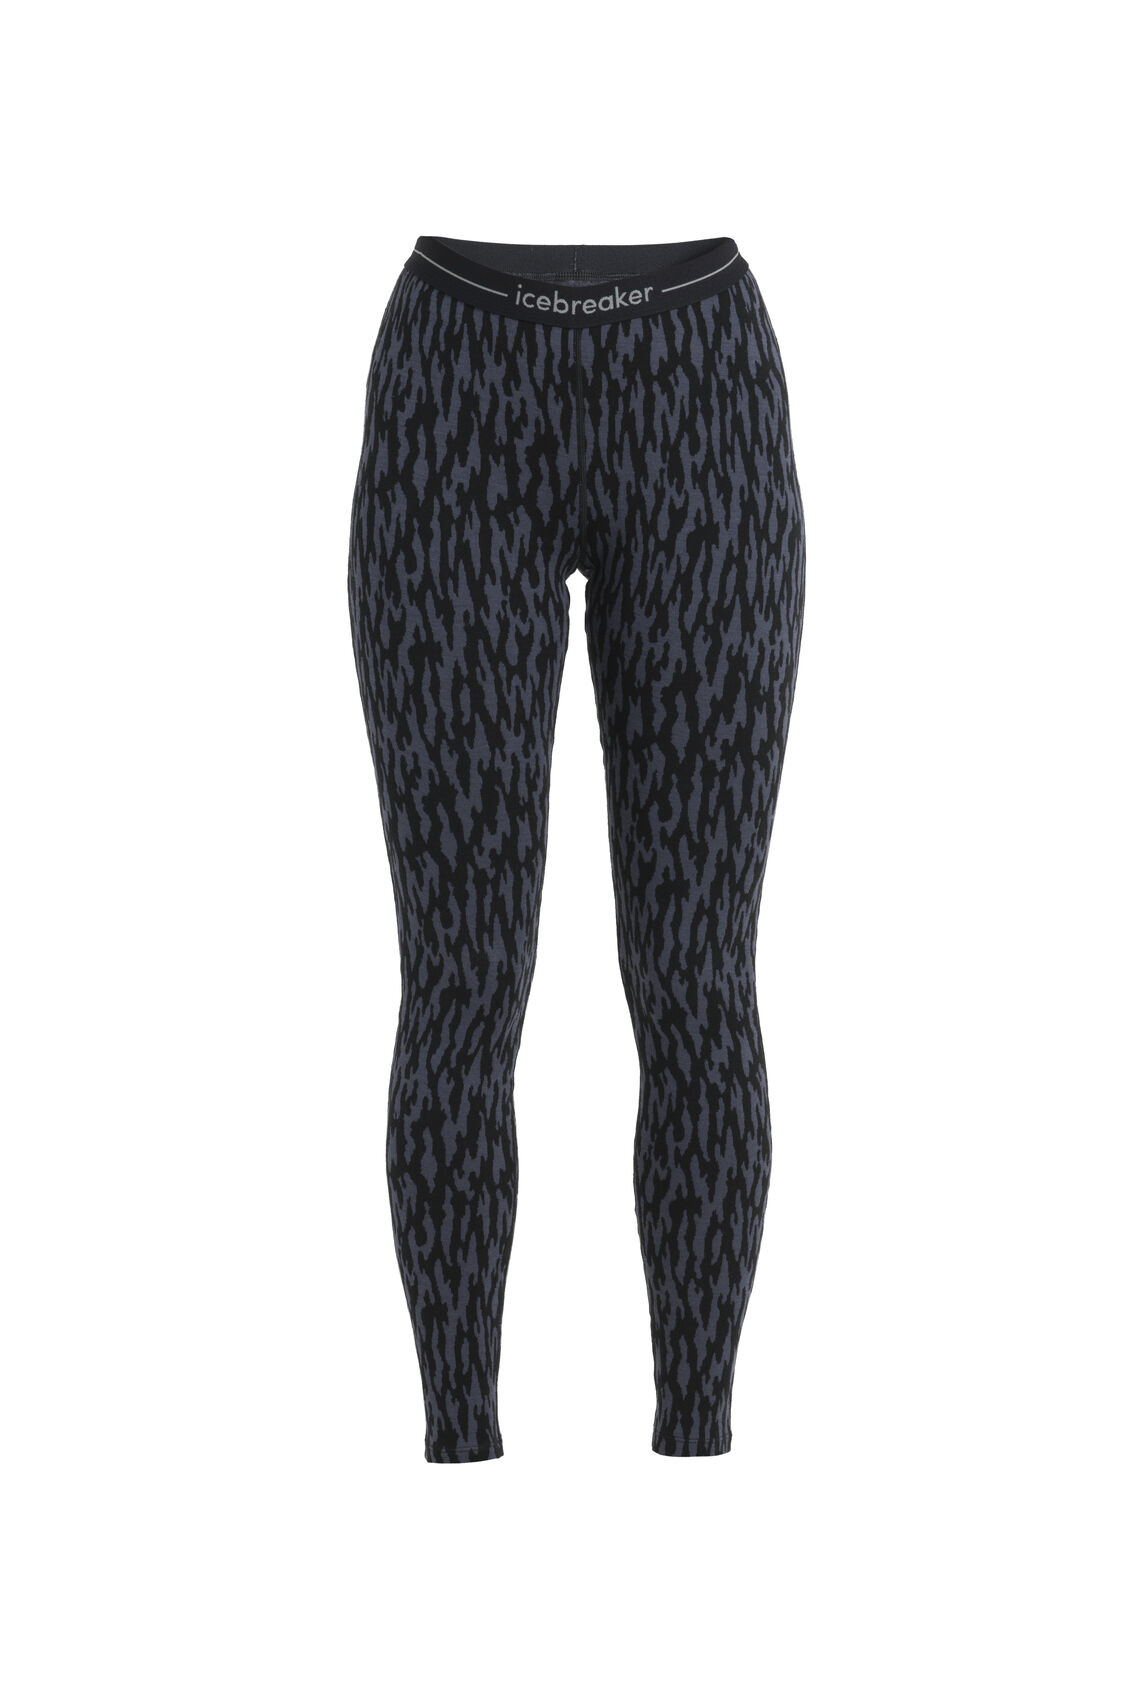 NorthWool Women's Merino Wool Thermal Baselayer Leggings with High Waist -  260 GSM - X-Small